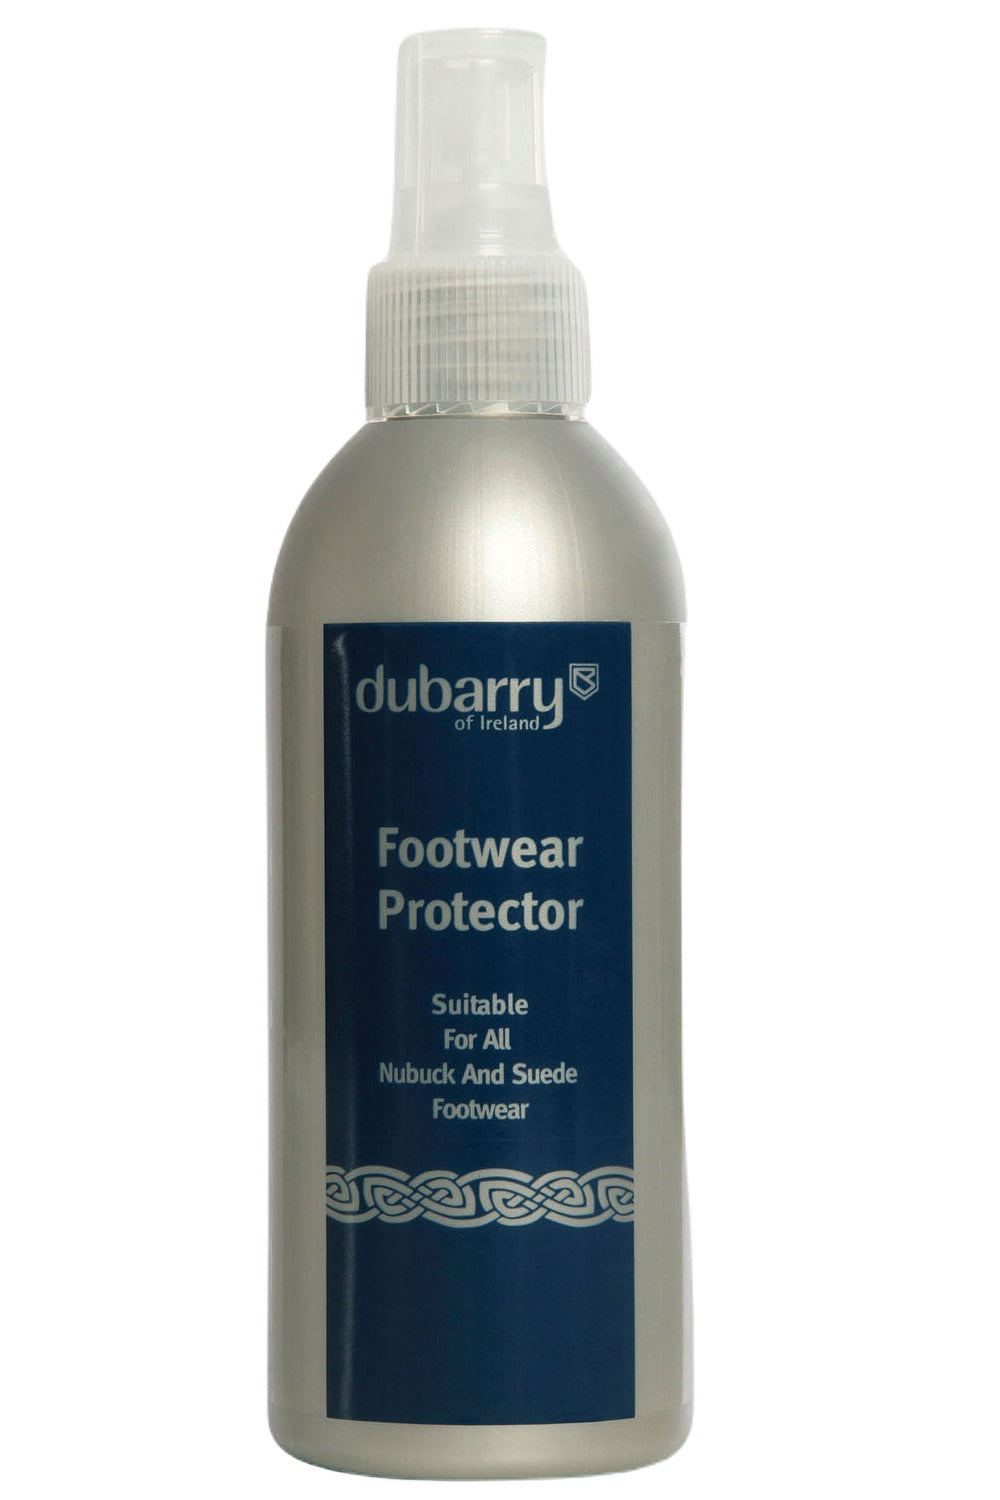 Dubarry Footwear Protector 150ml